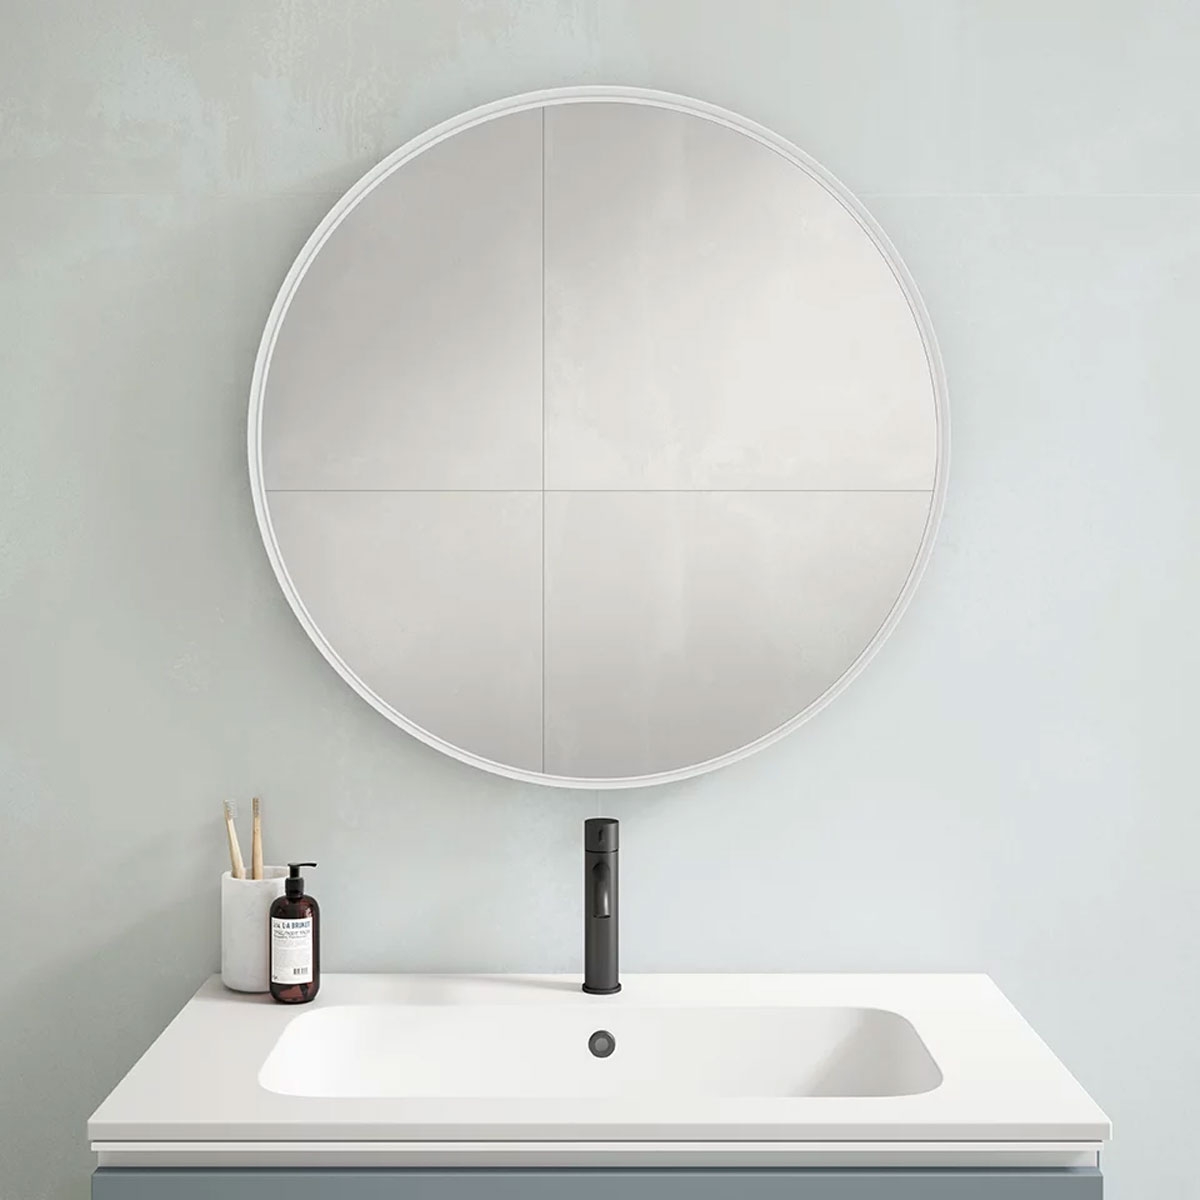 Espejo redondo para baño en varias medidas Modelo Alexa